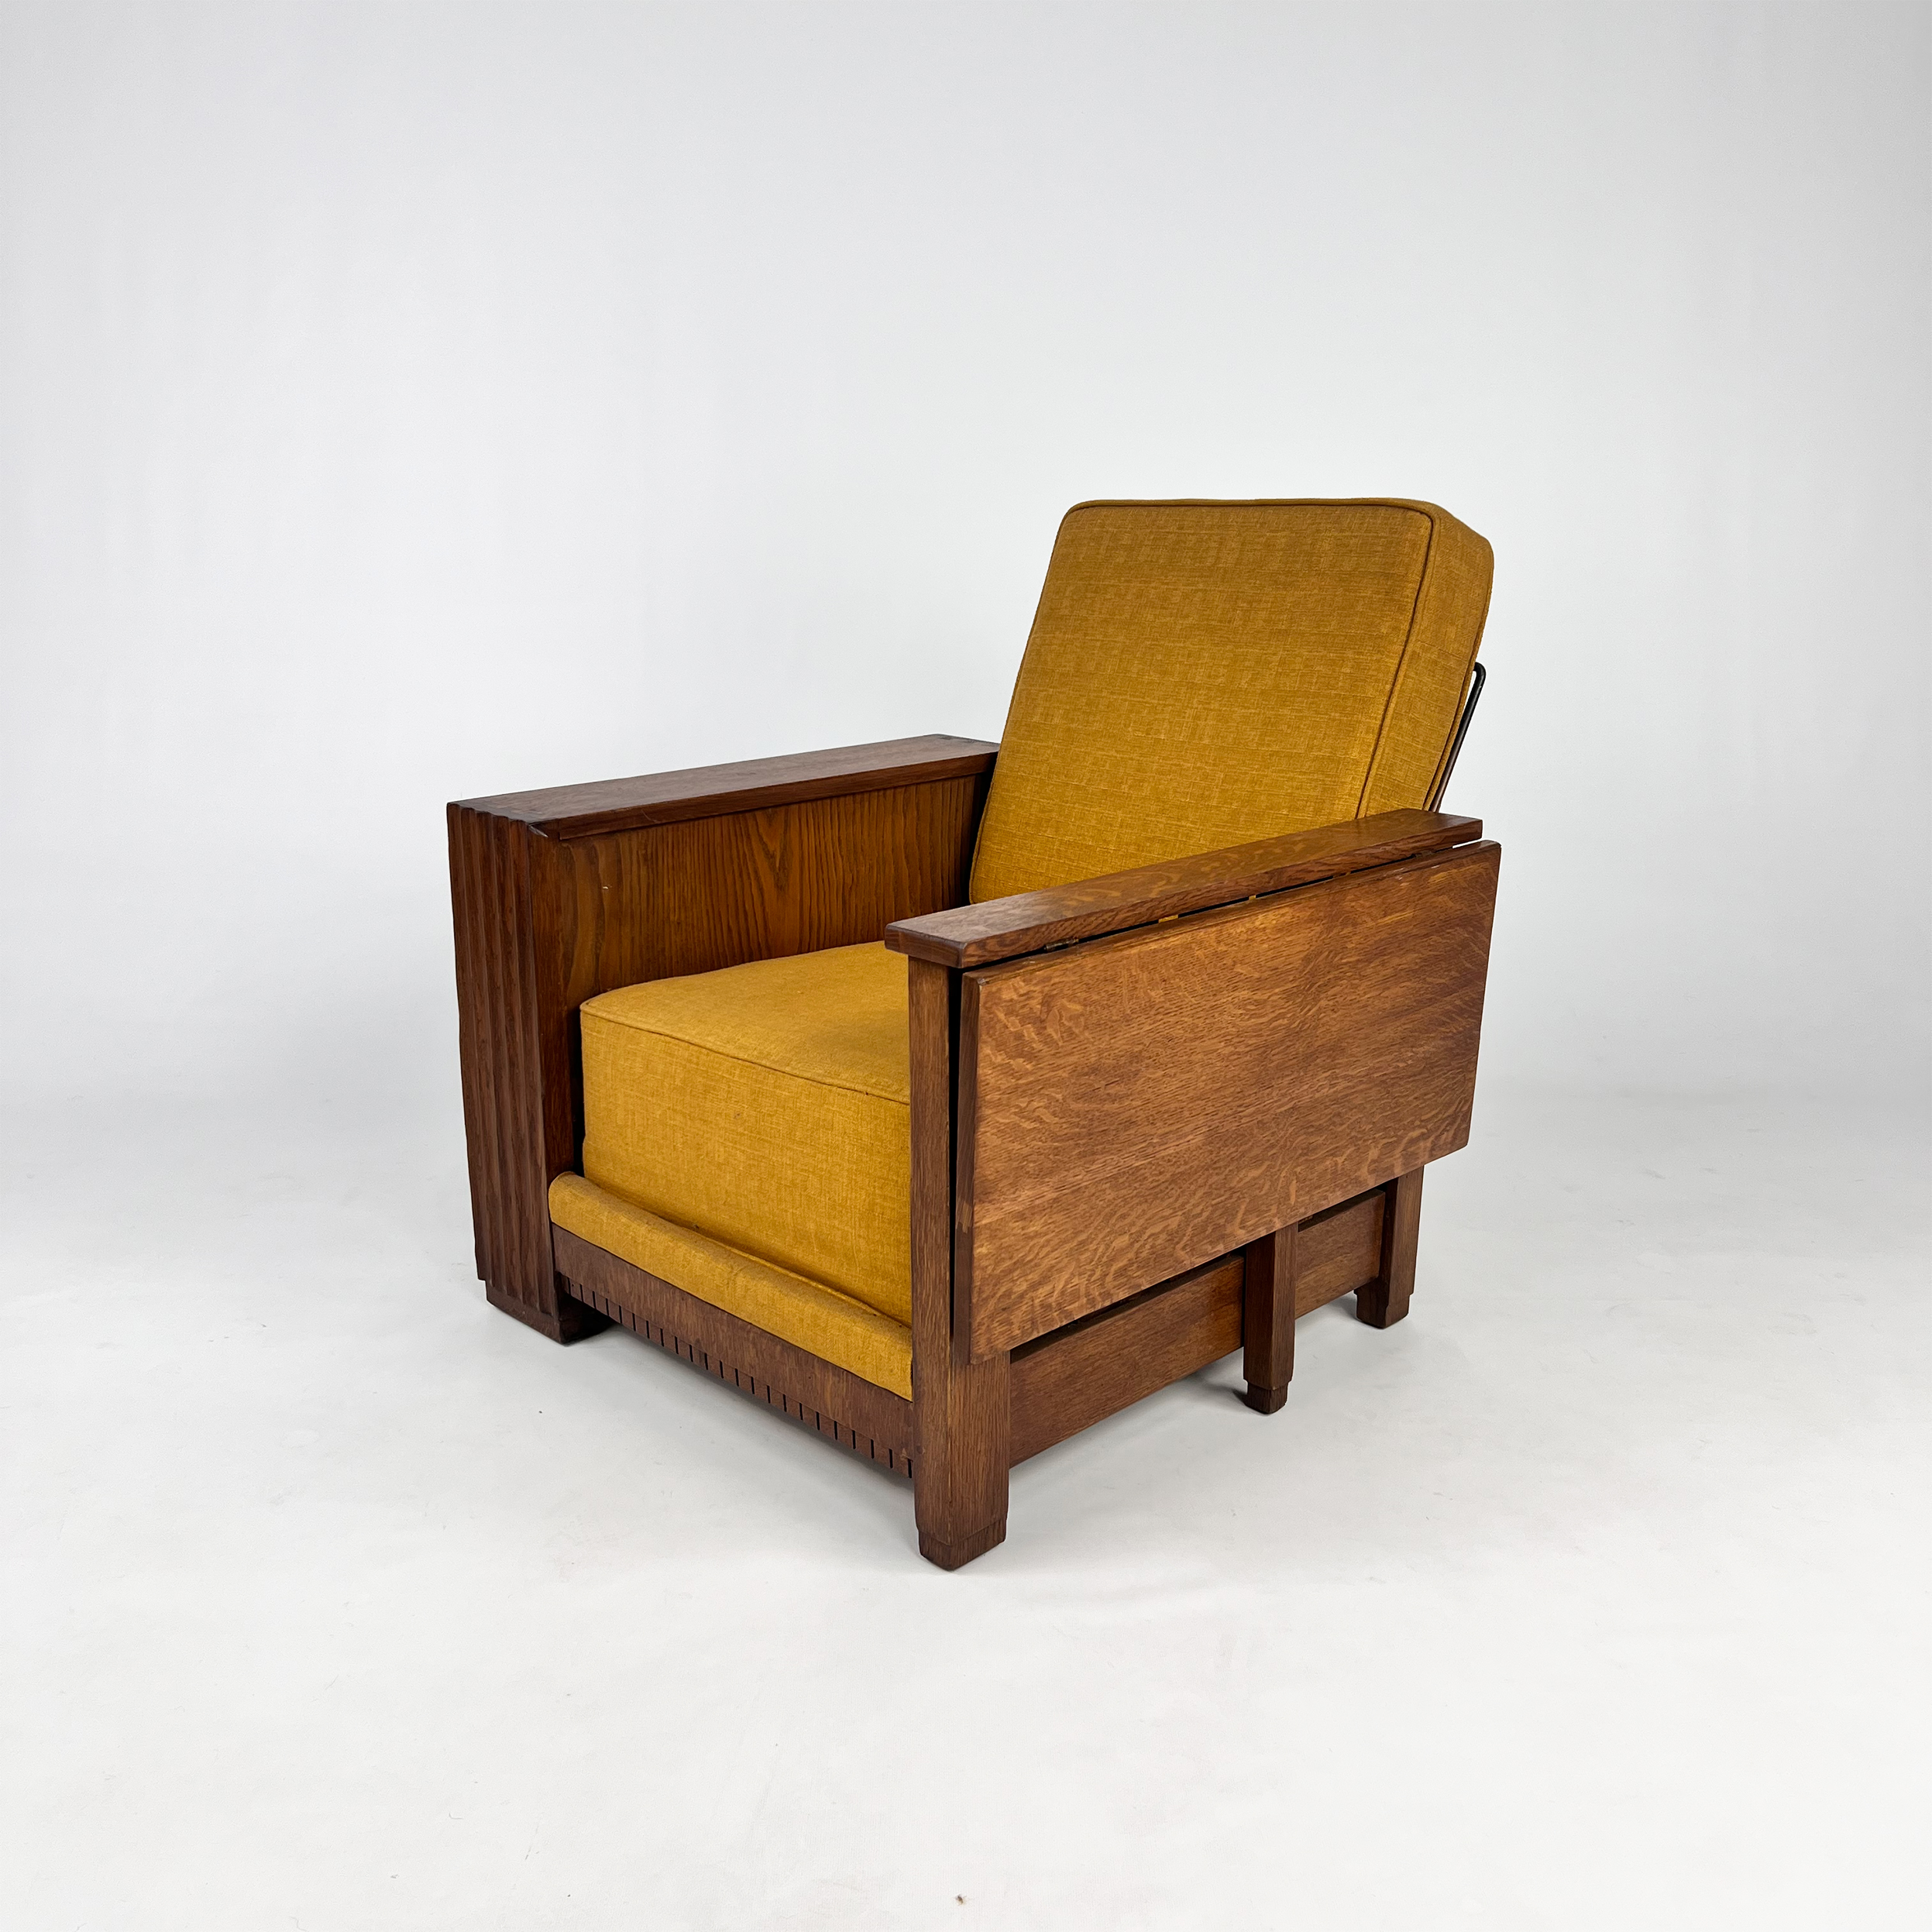 Ambrose Heals, Heal's & Son London, Oak Library Chair, 1920s